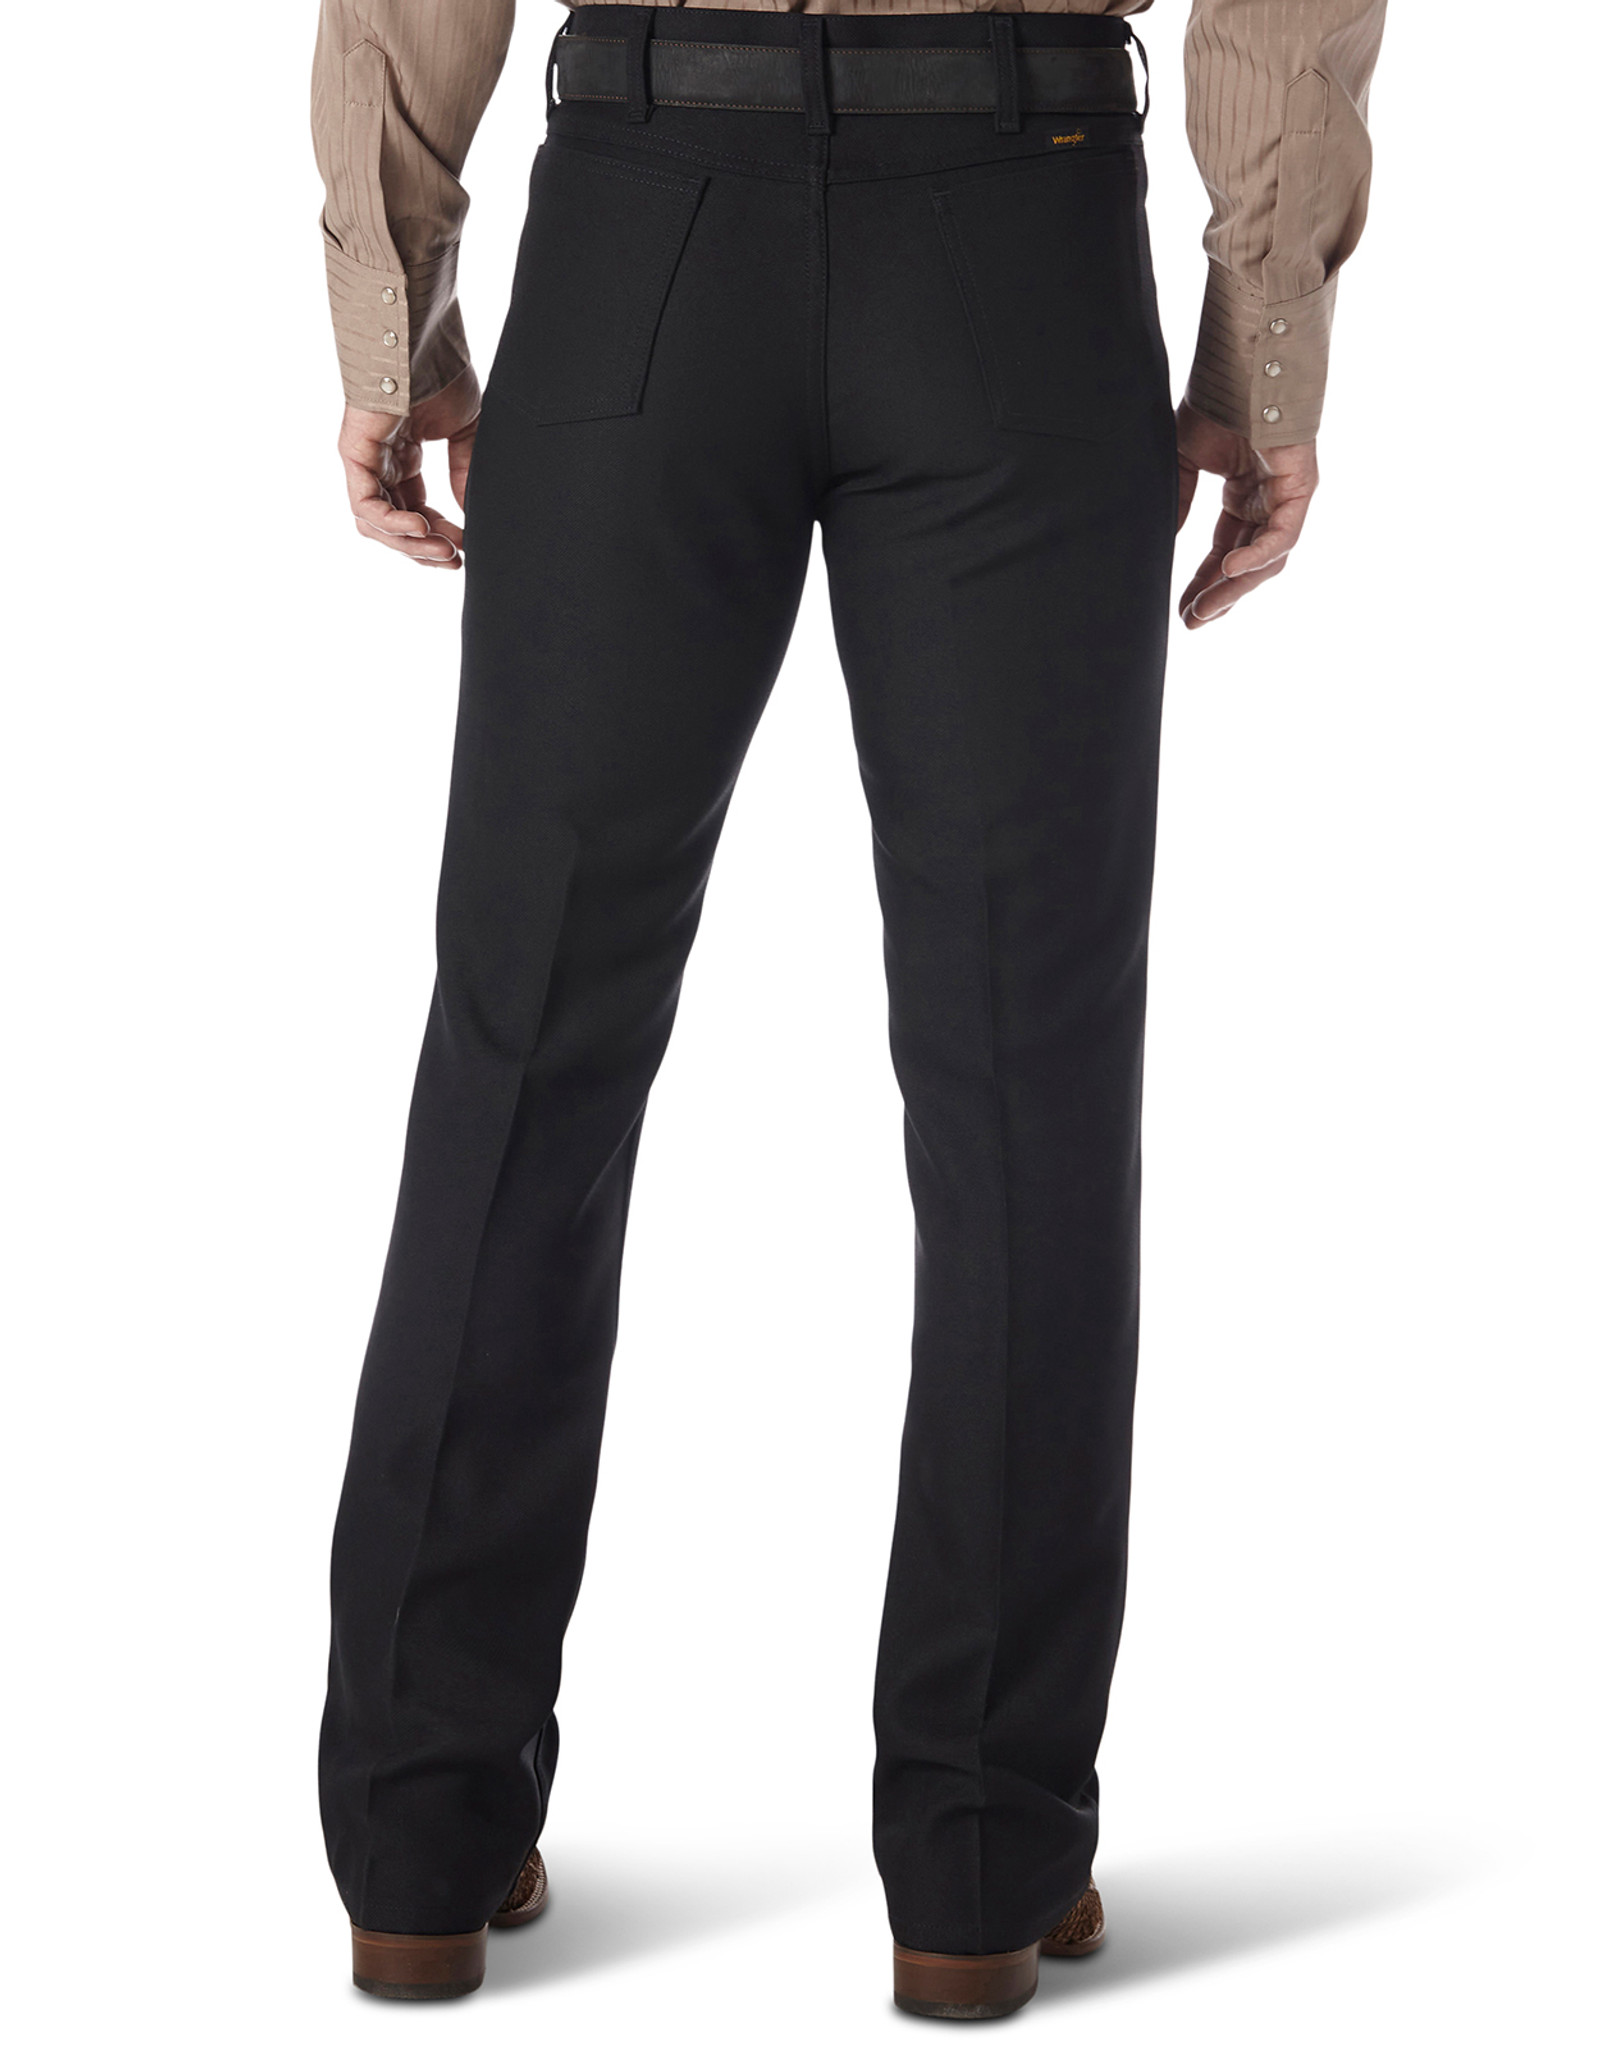 Wrangler Men's Wrancher High Rise Regular Fit Boot Cut Pant - Black